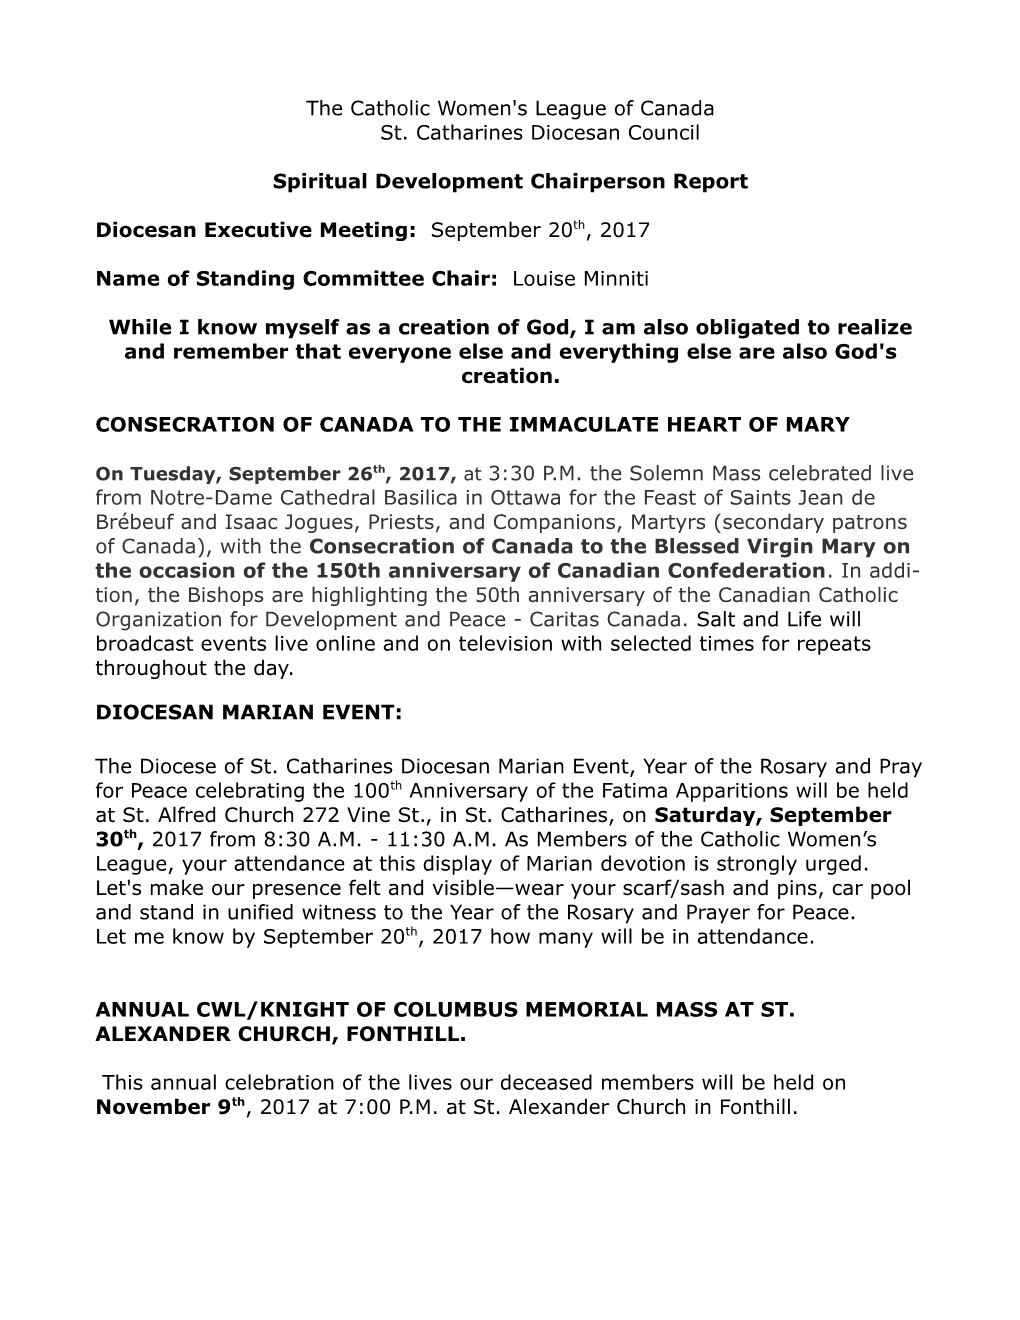 Spiritual Development Chairperson Report